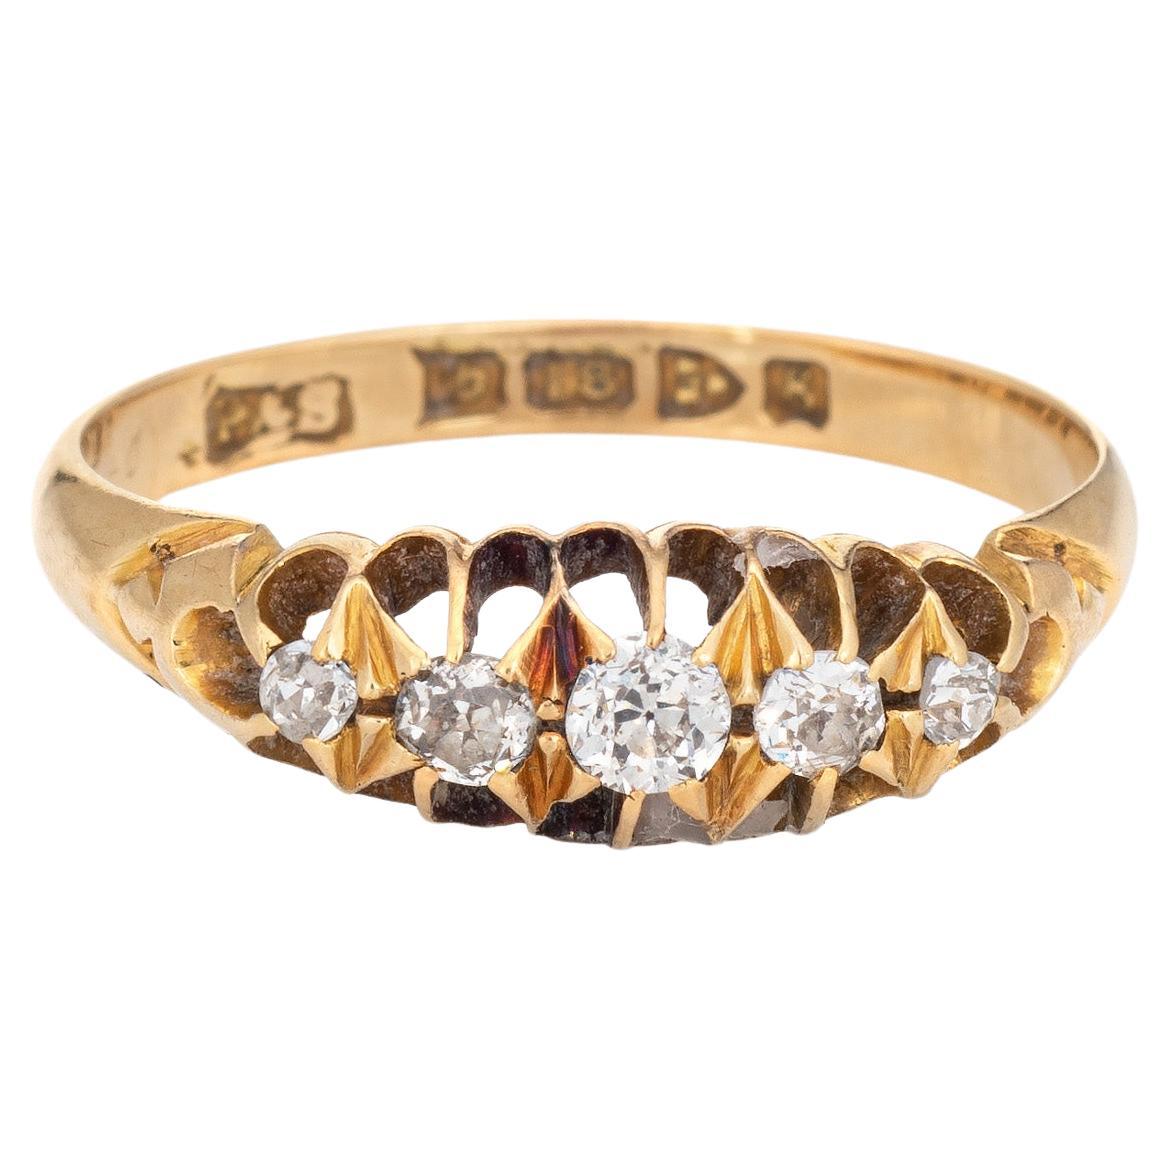 Antique Edwardian Diamond Ring c1905 5 Stone Band 18k Gold Jewelry Chester